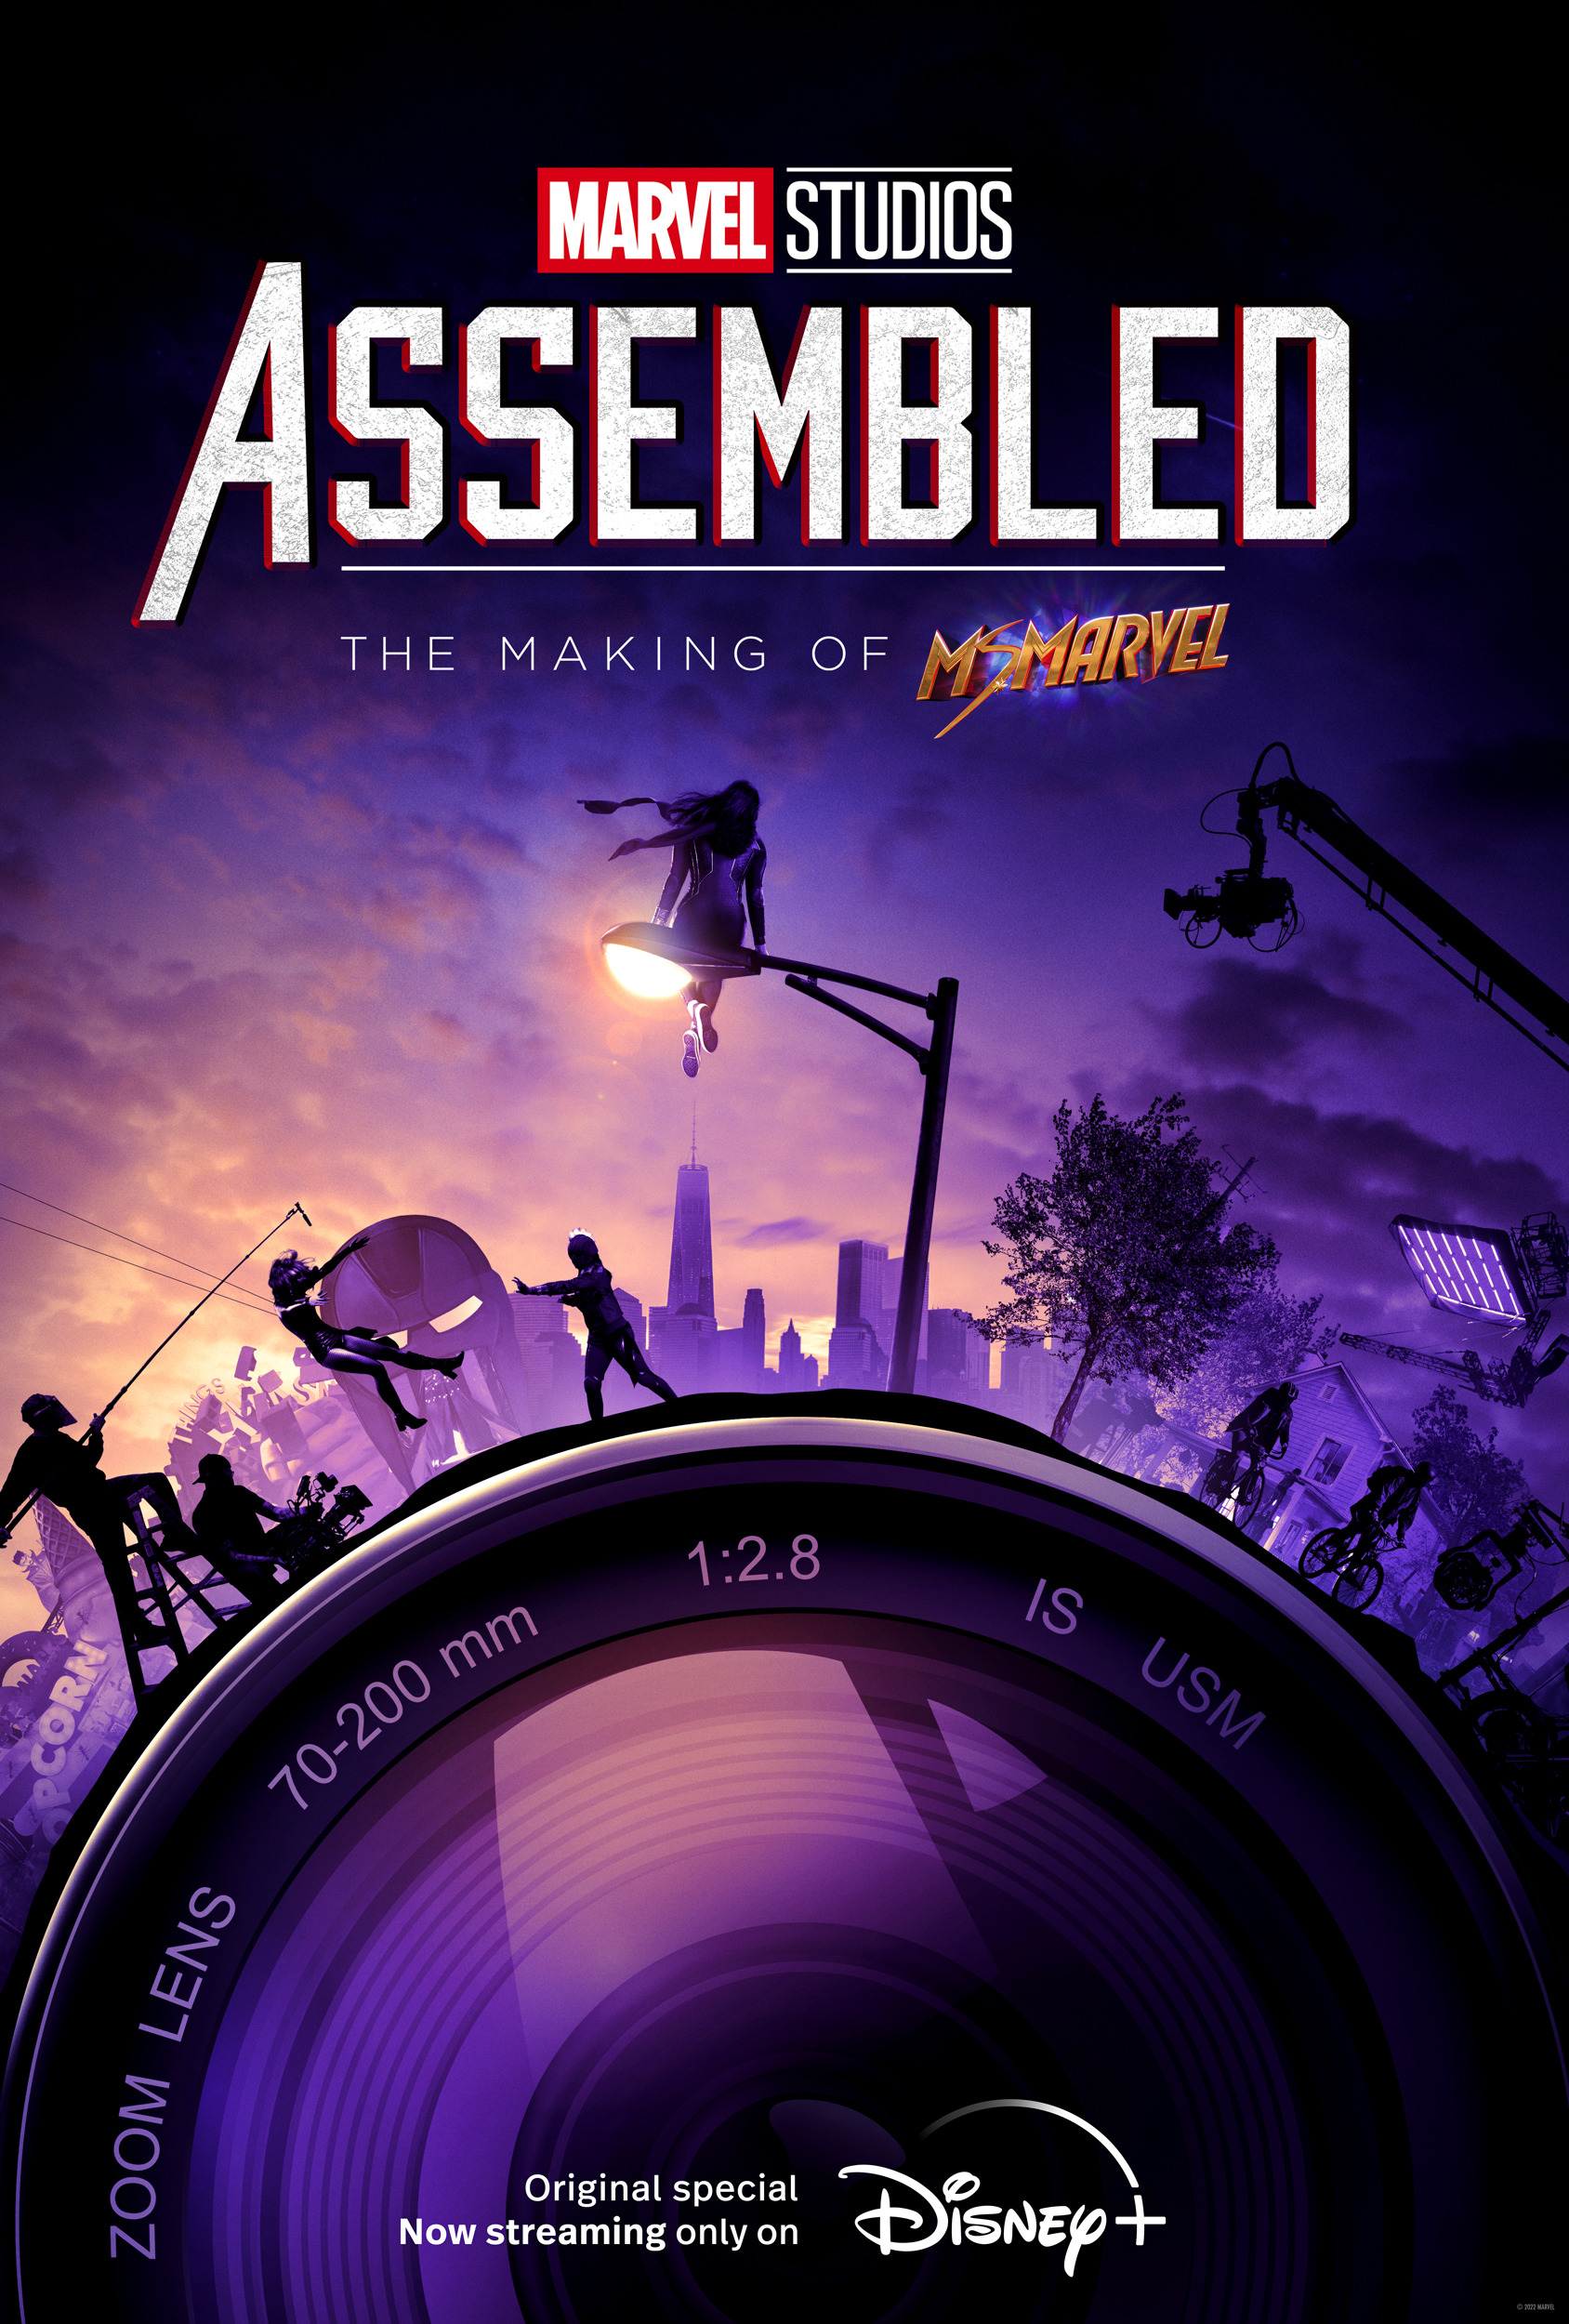 Mega Sized Movie Poster Image for Marvel Studios: Assembled (#11 of 12)